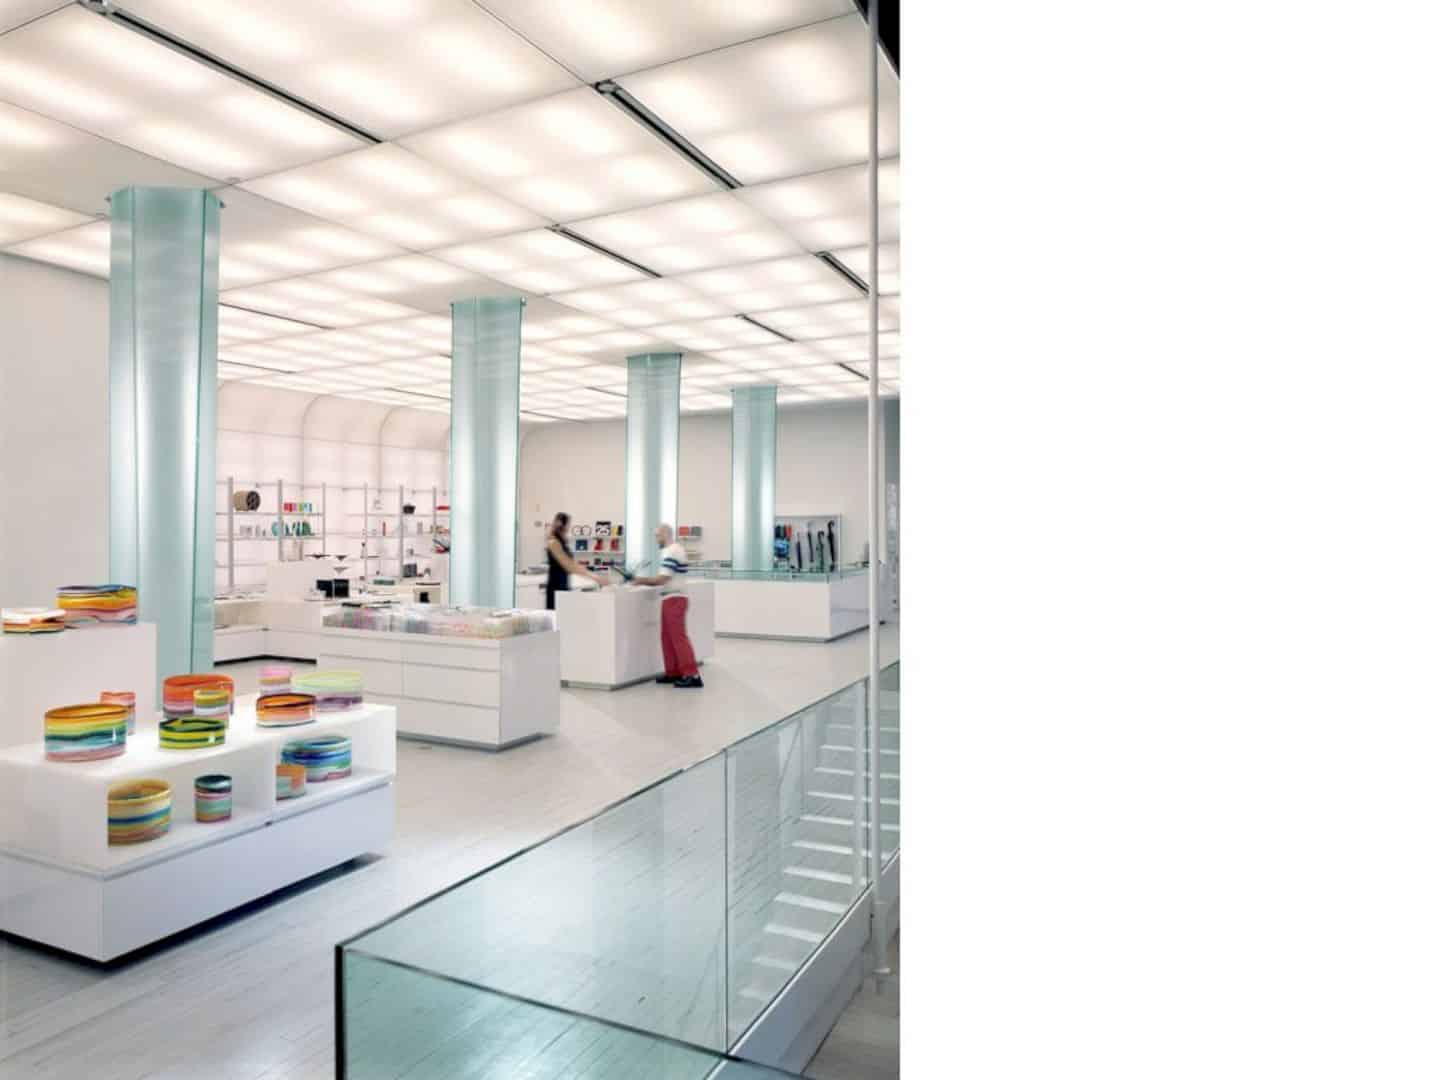 Moma Design Store Soho A Contemporary Retail Environment Within Sohos Historic Building 3